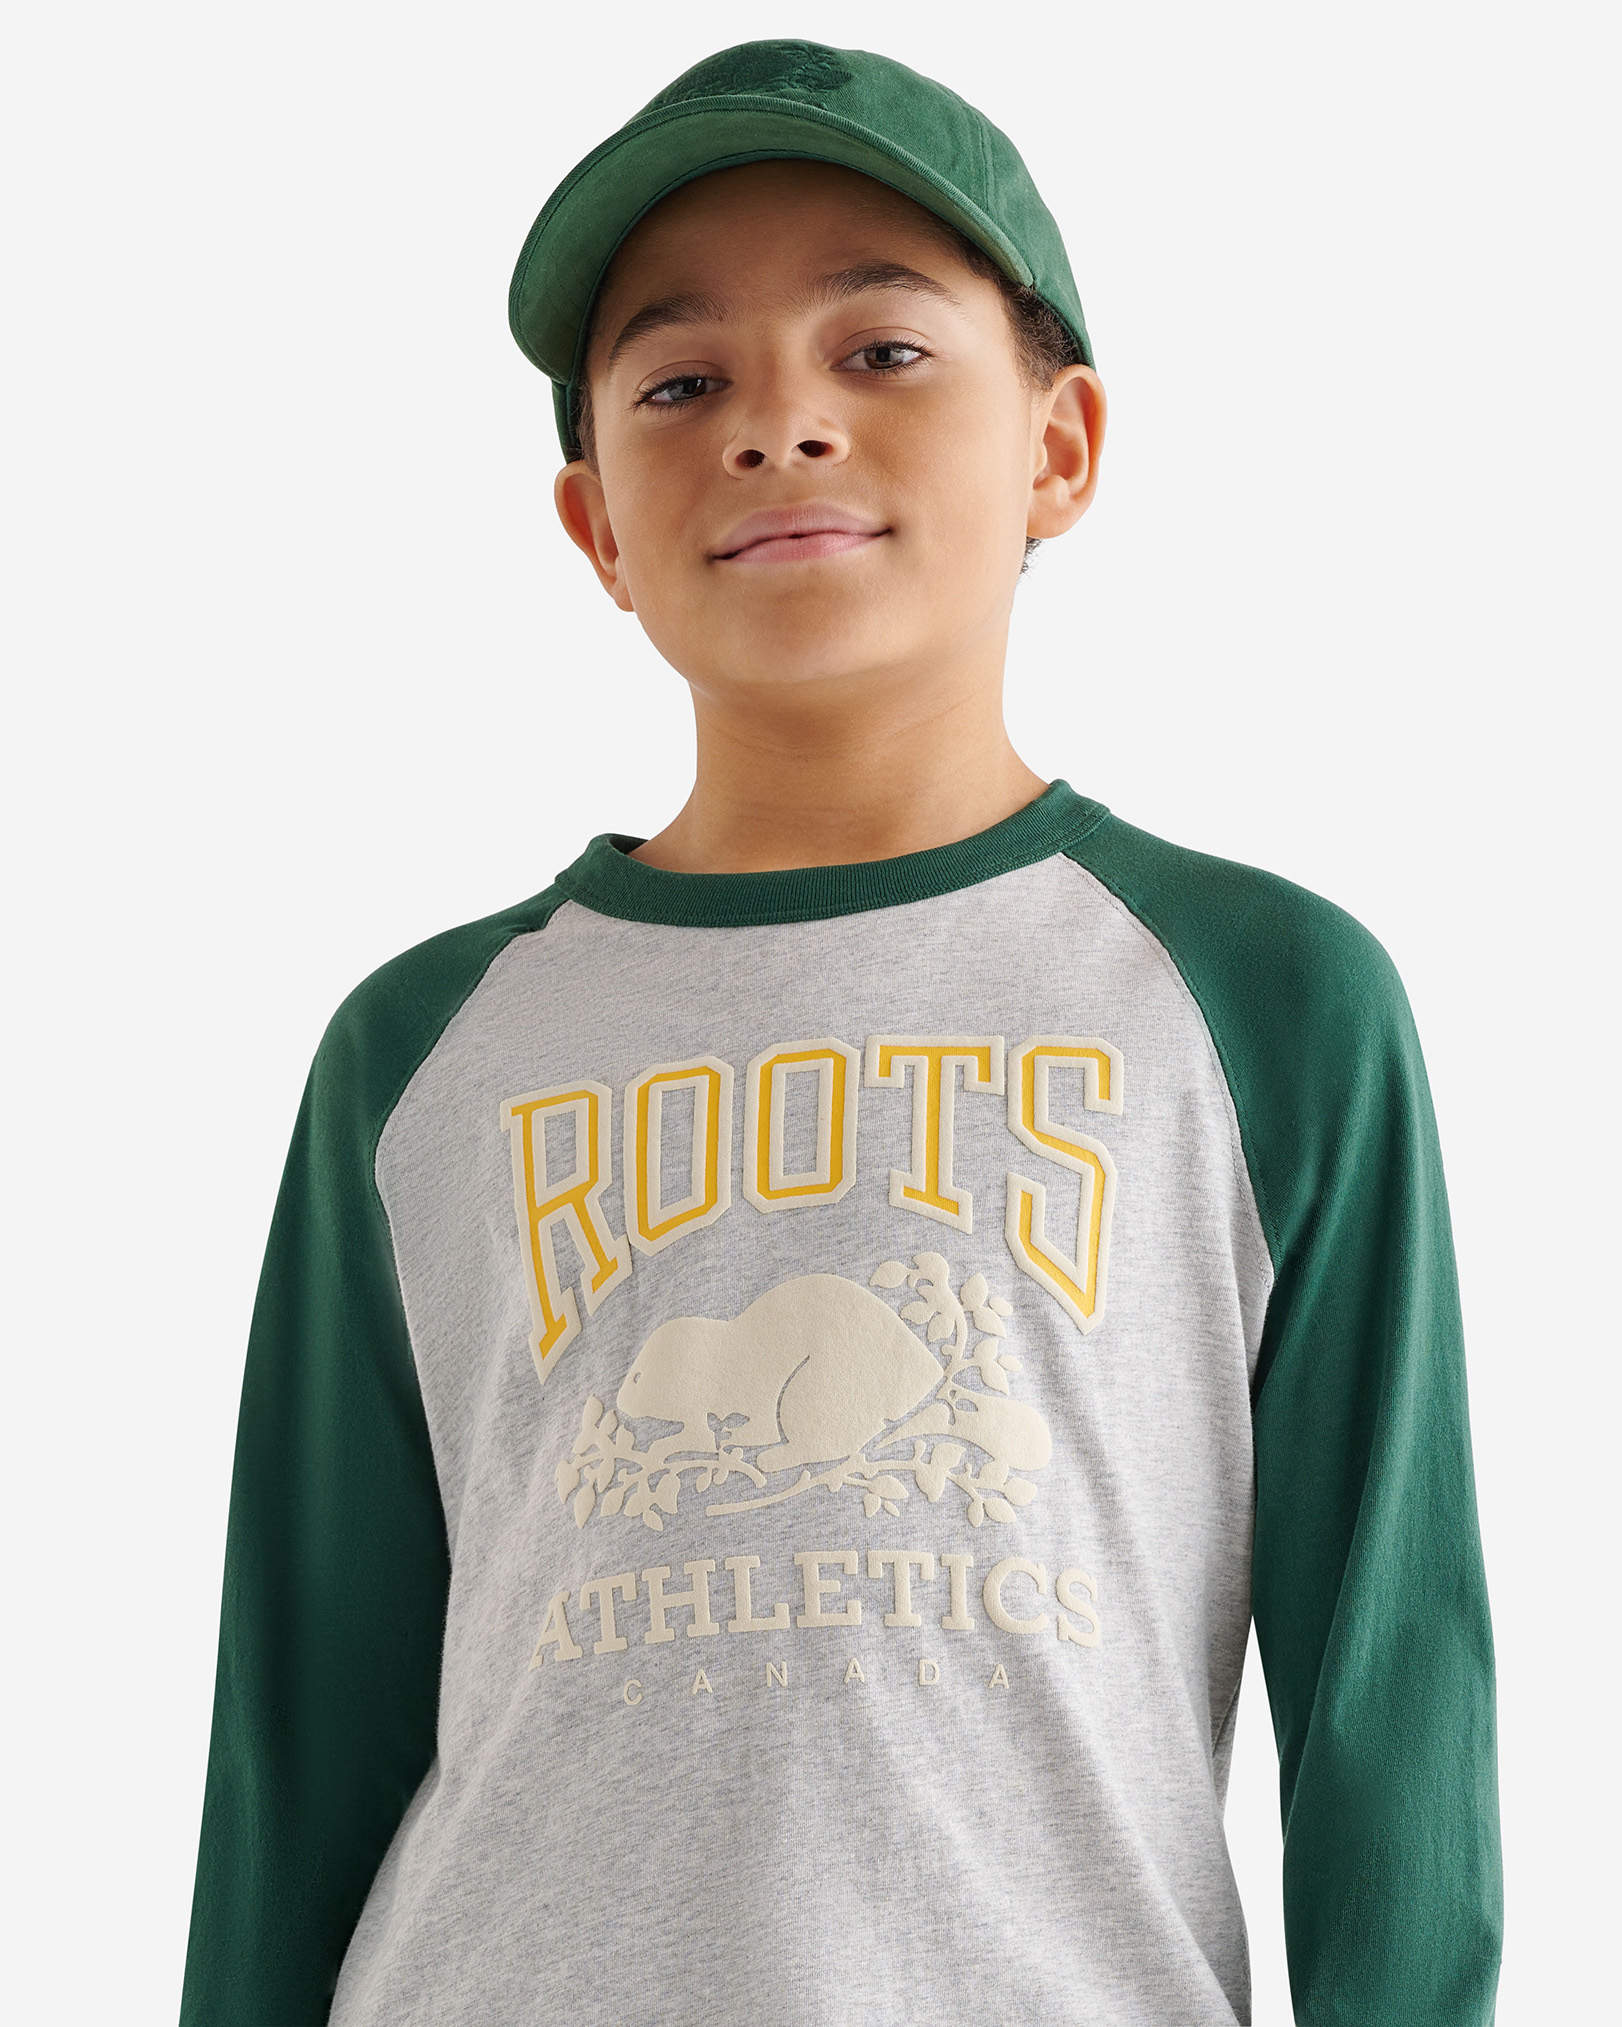 Roots Kids RBA Raglan T-Shirt in Athletic Grey Mix